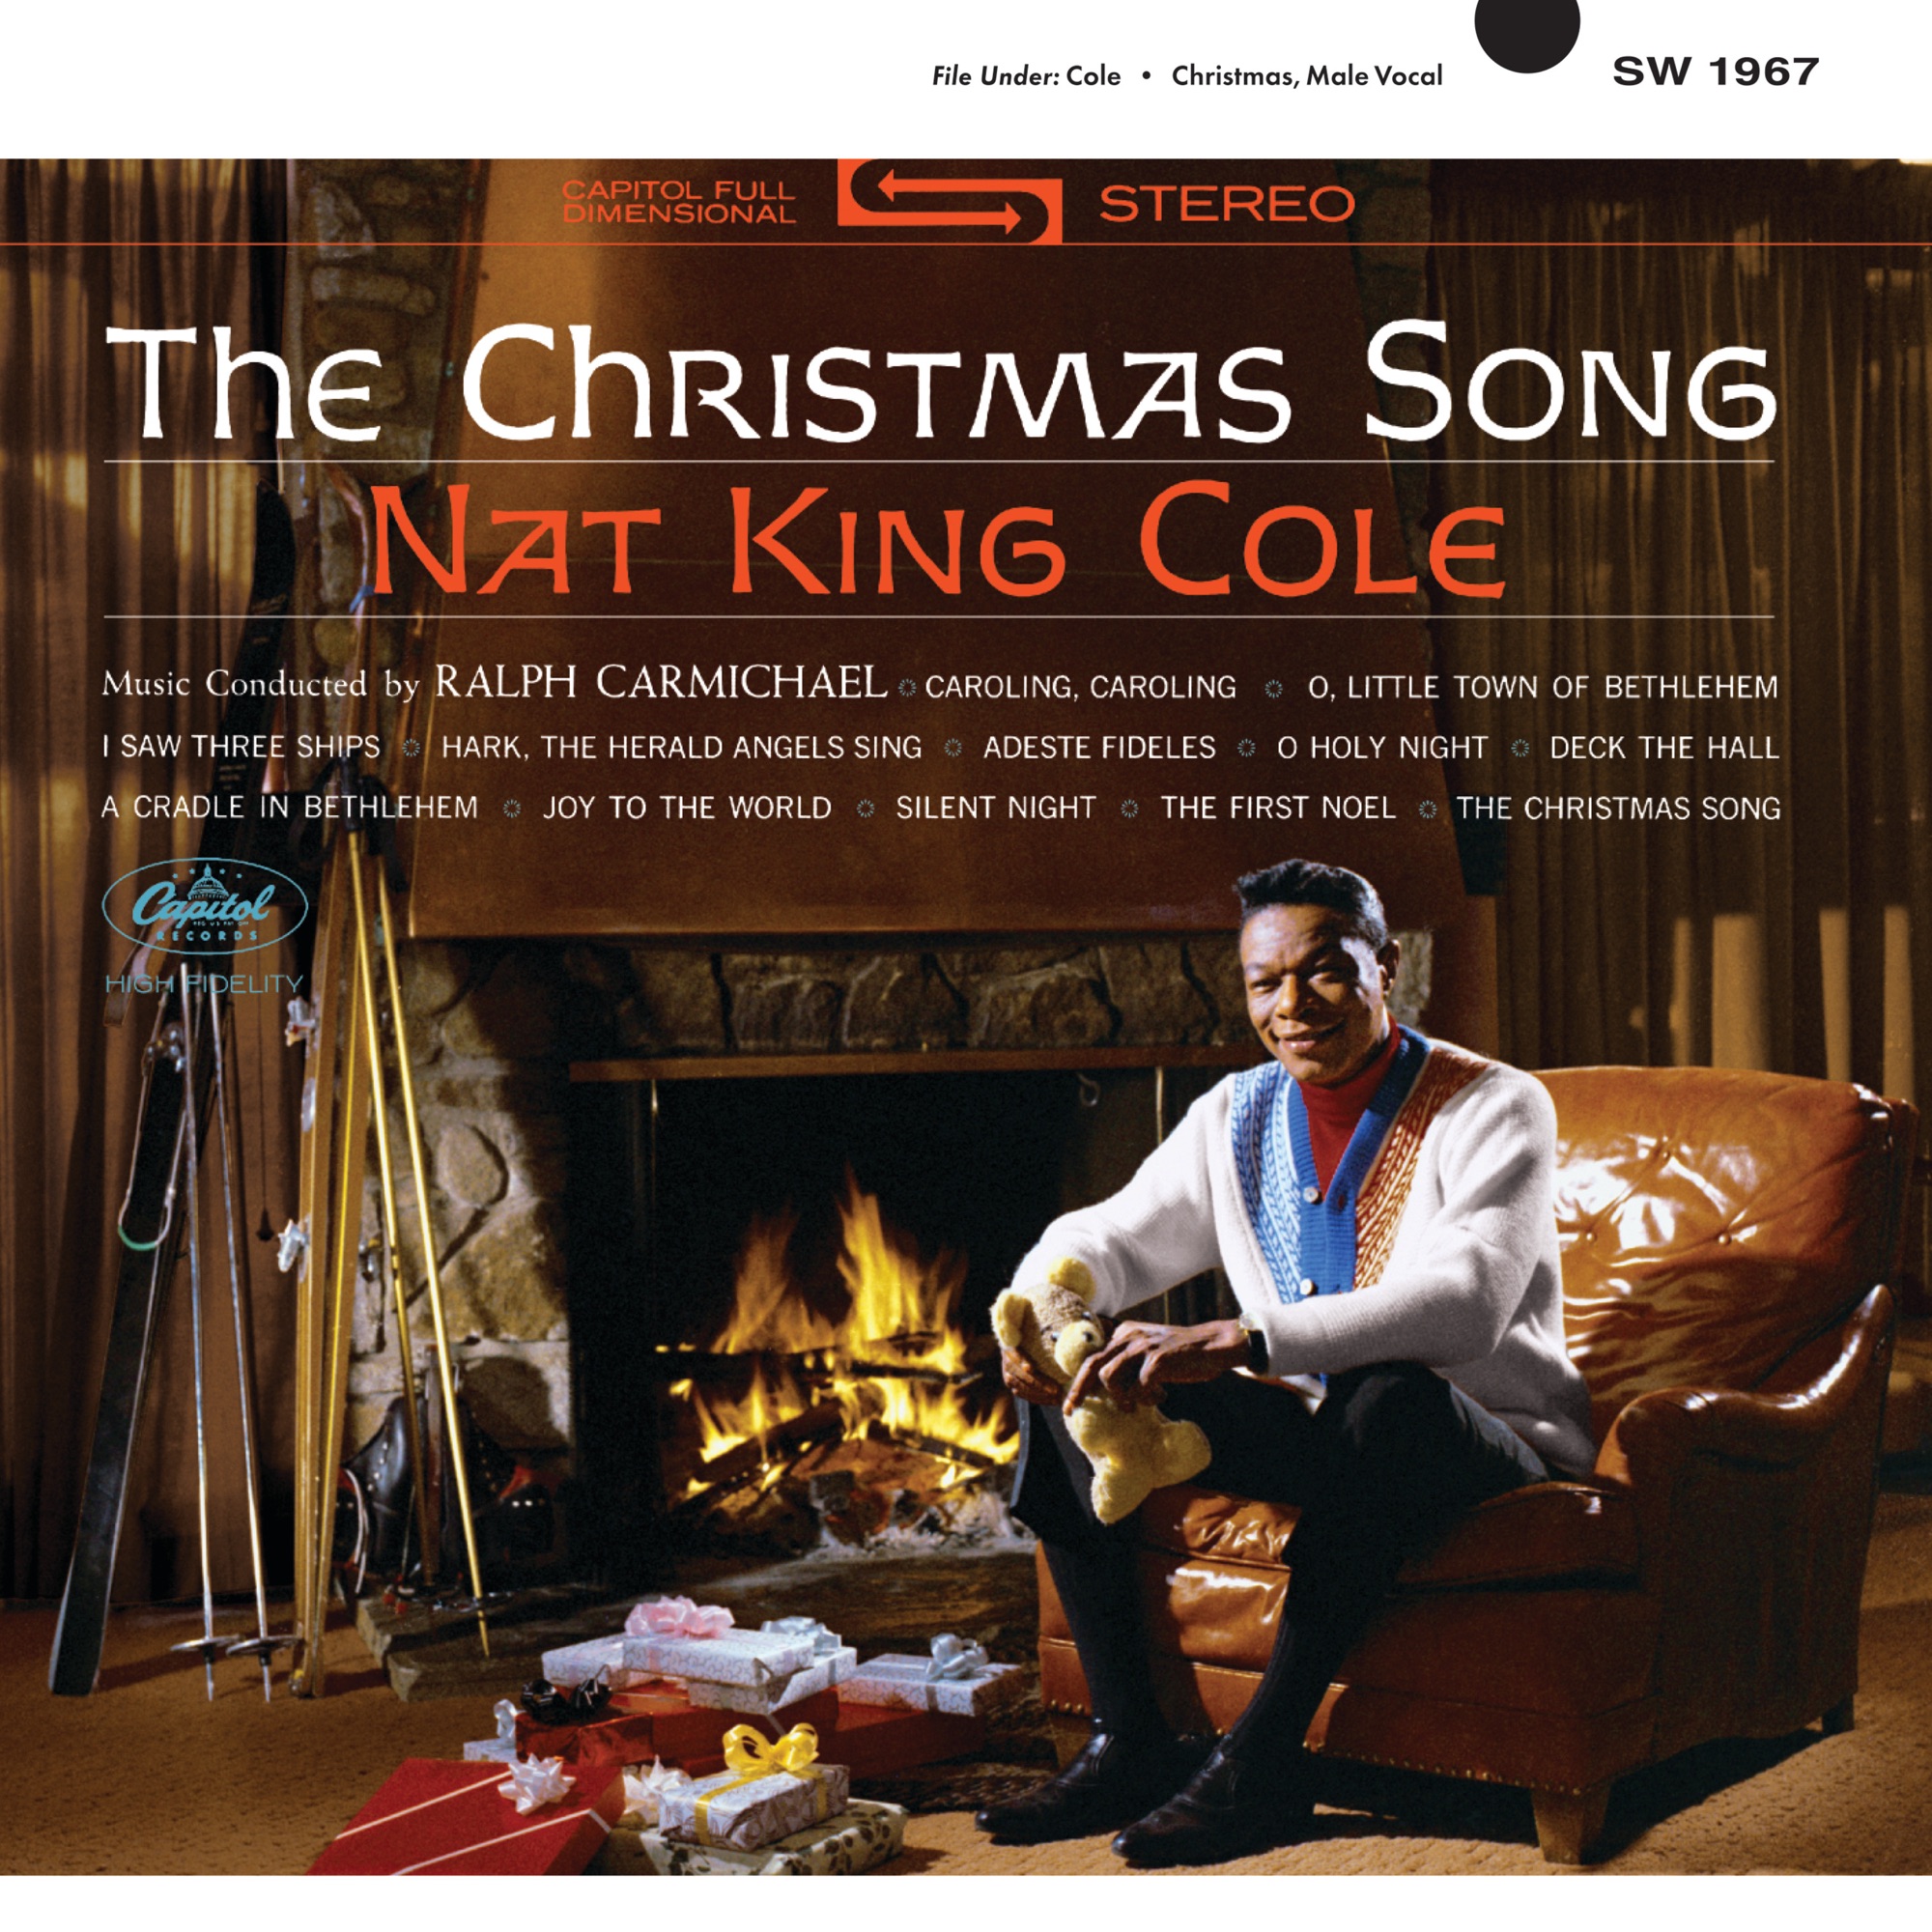 Nat "King" Cole - The Christmas Song (Merry Christmas to You) - Single